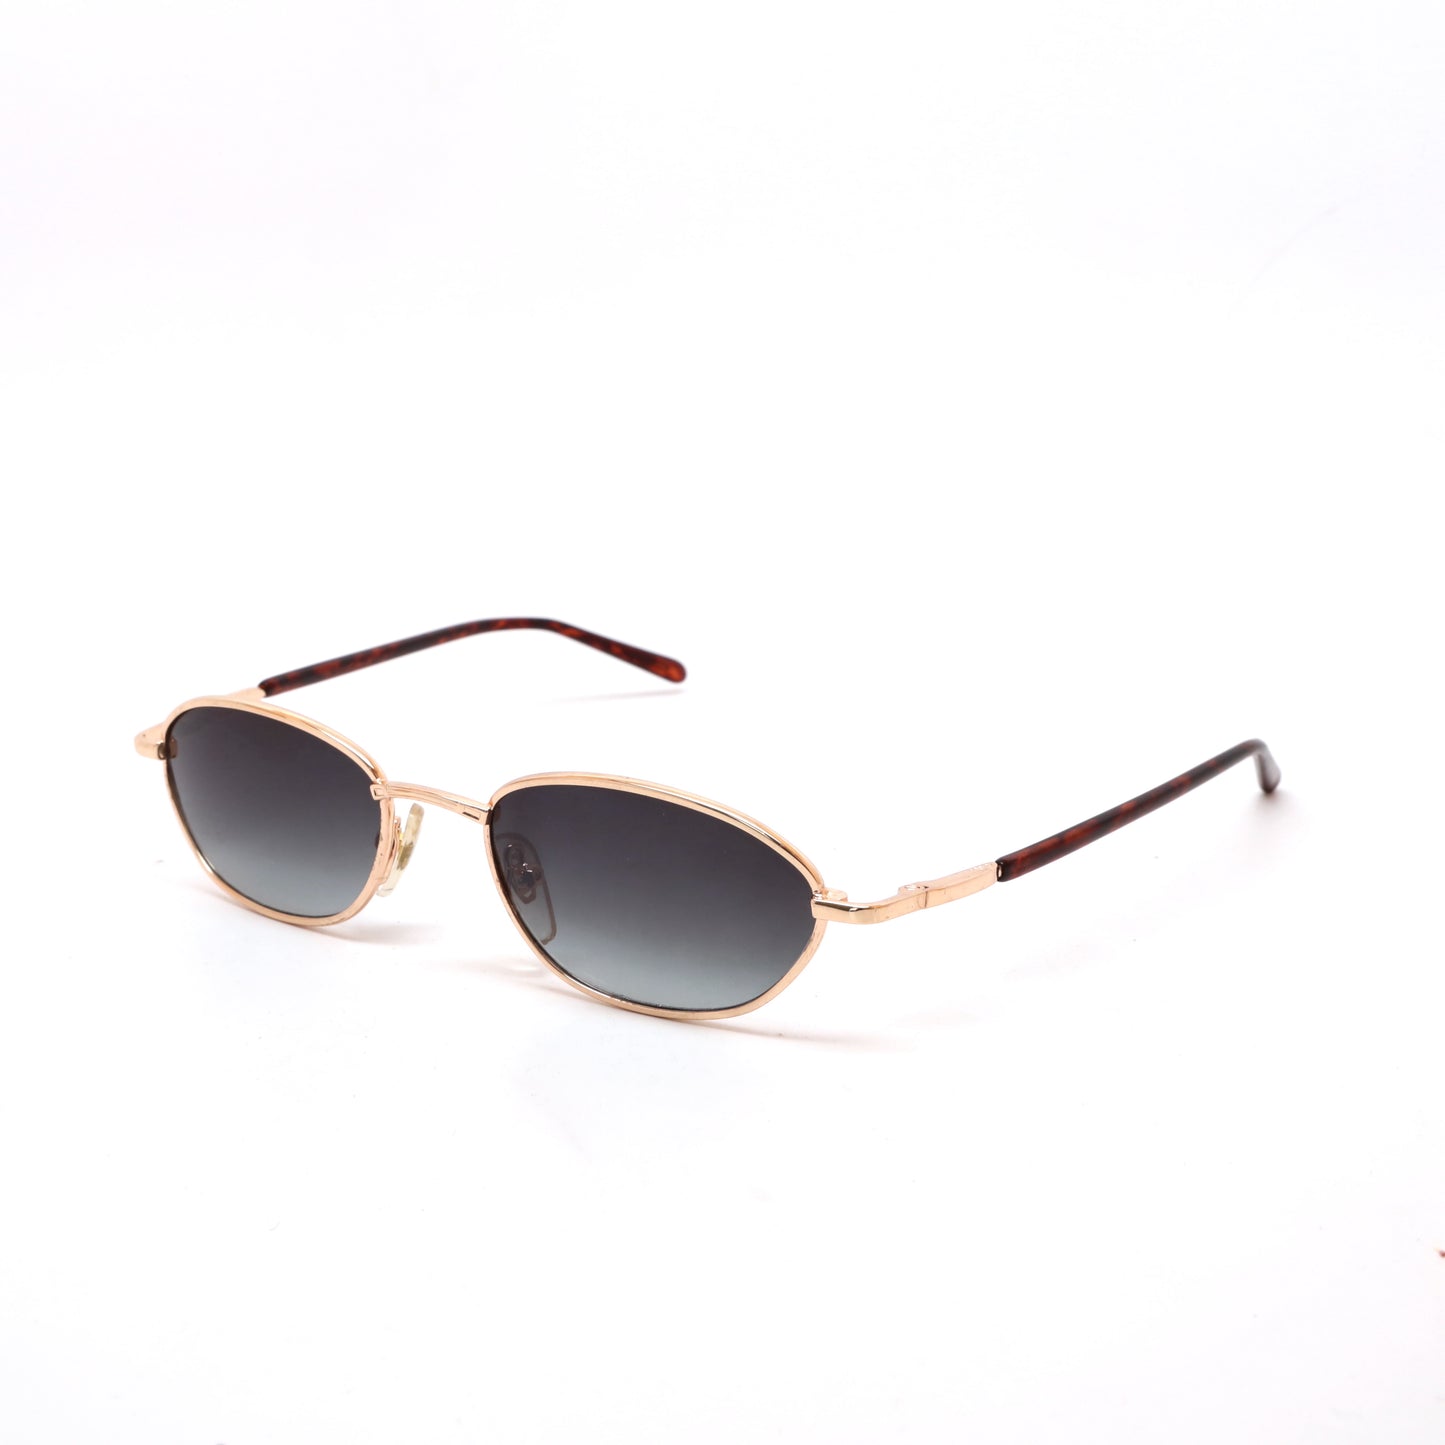 Vintage Small Size Deadstock Santa Fe Rectangular Sunglasses - Gold